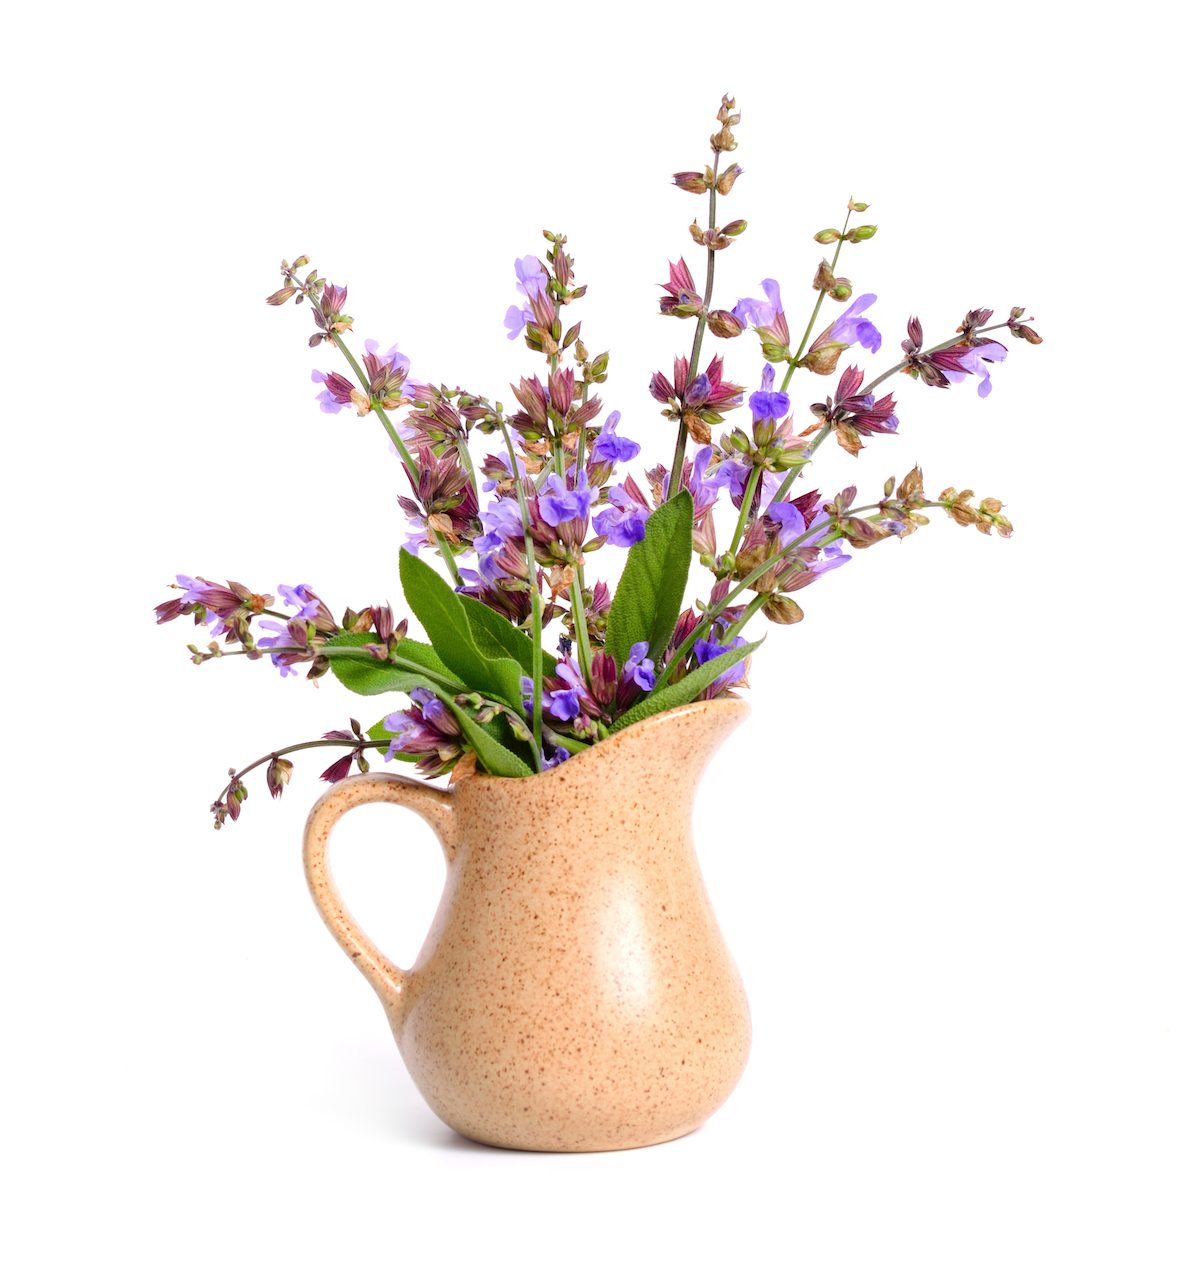 Salvia,officinalis,(sage,,also,called,garden,sage,,or,common,sage)